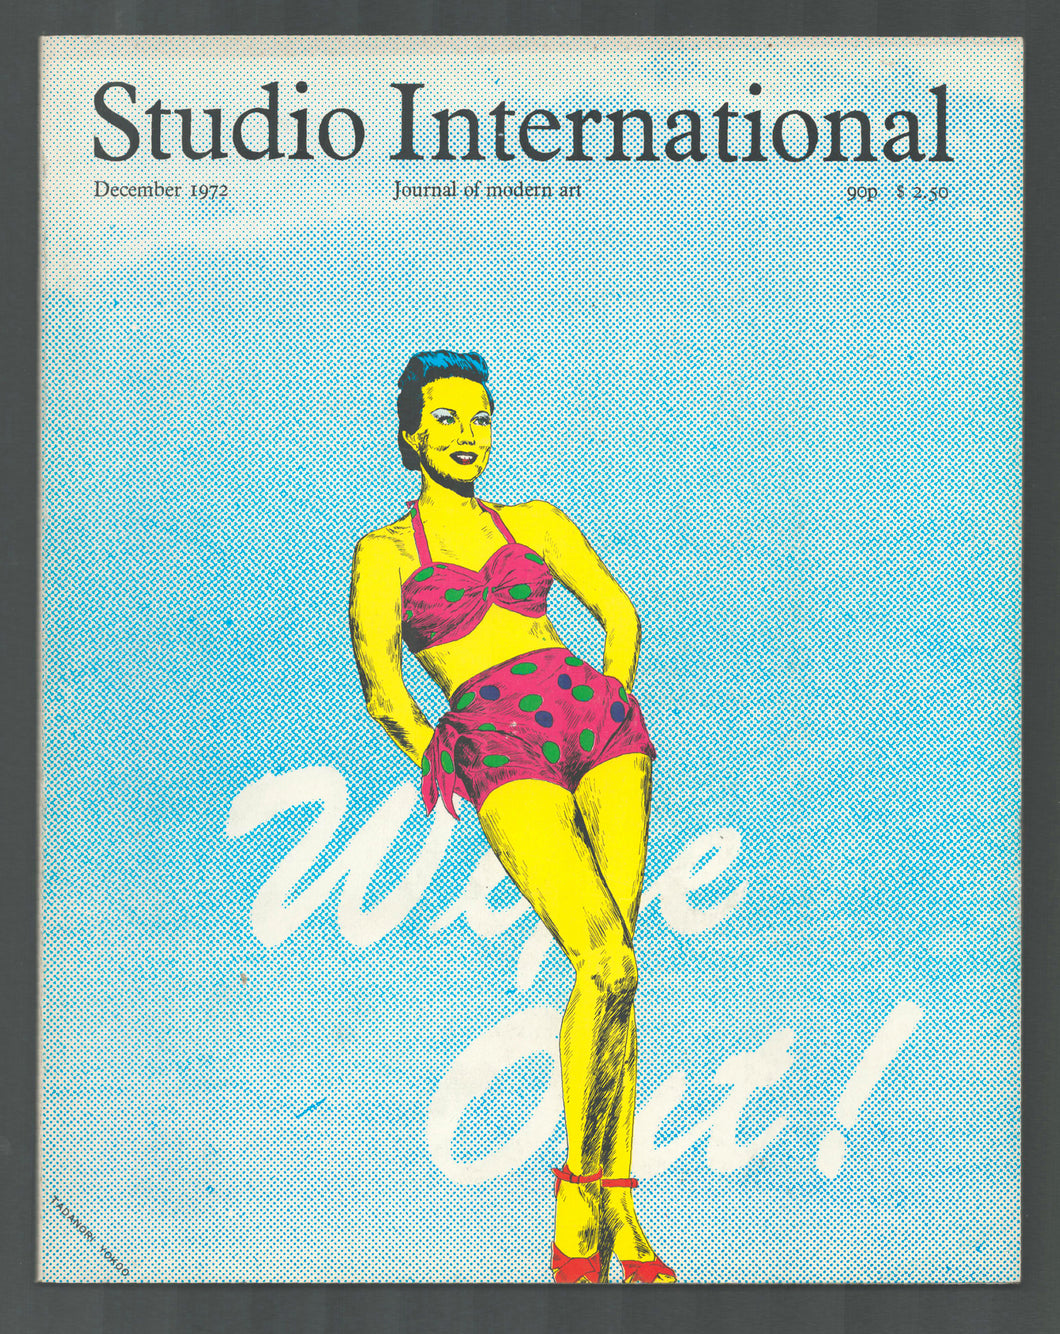 Studio International Dec 1972